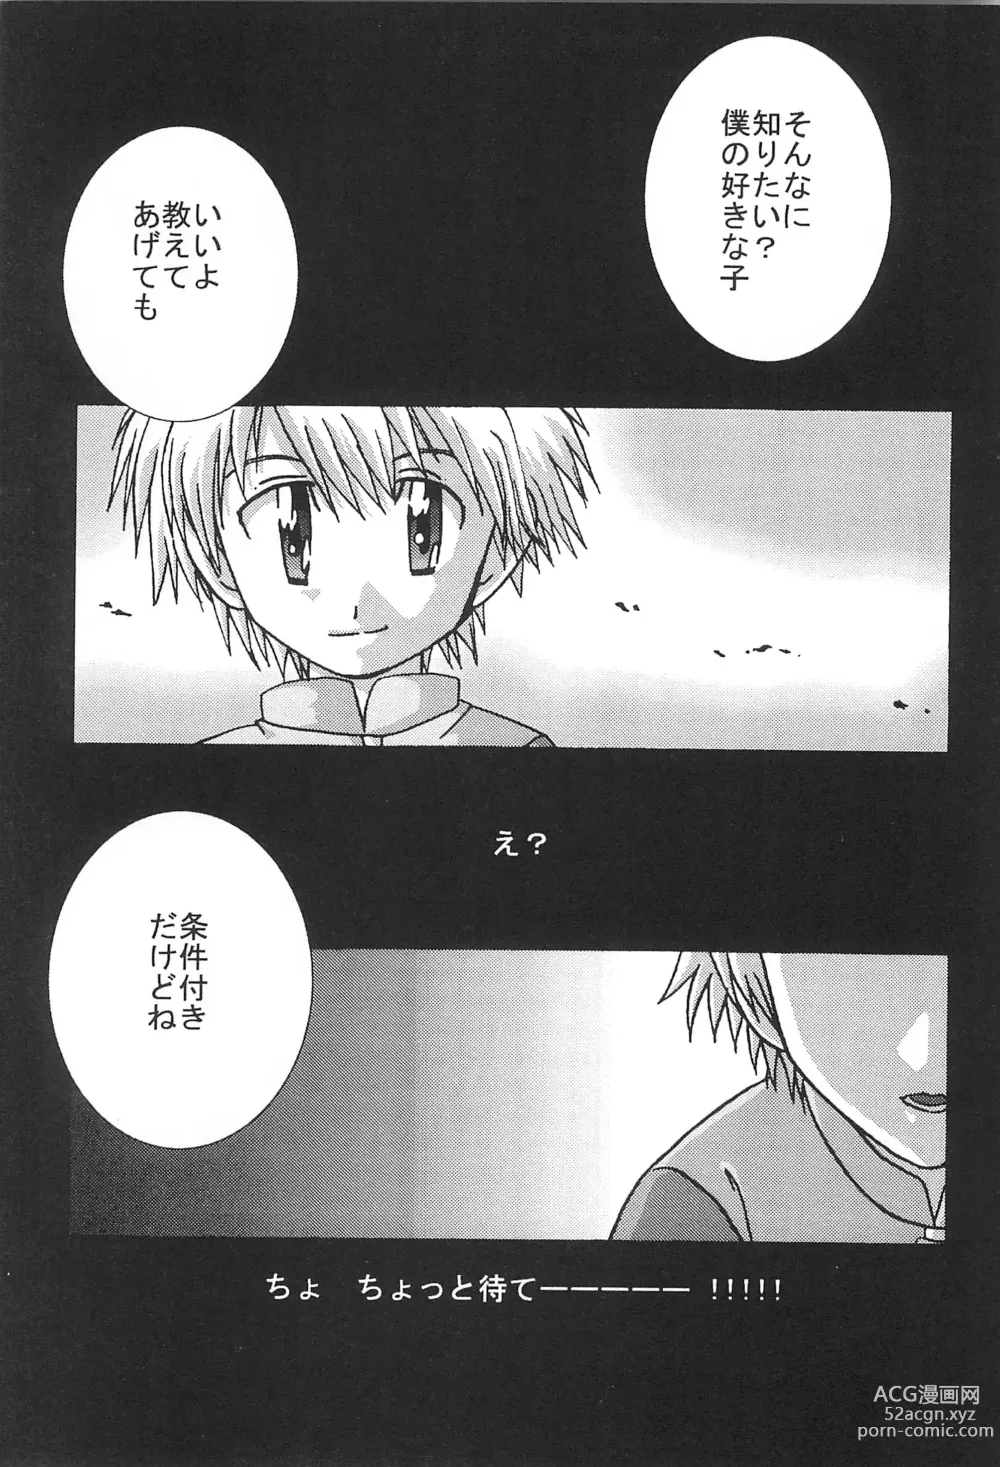 Page 5 of doujinshi SUBTLE RELATION